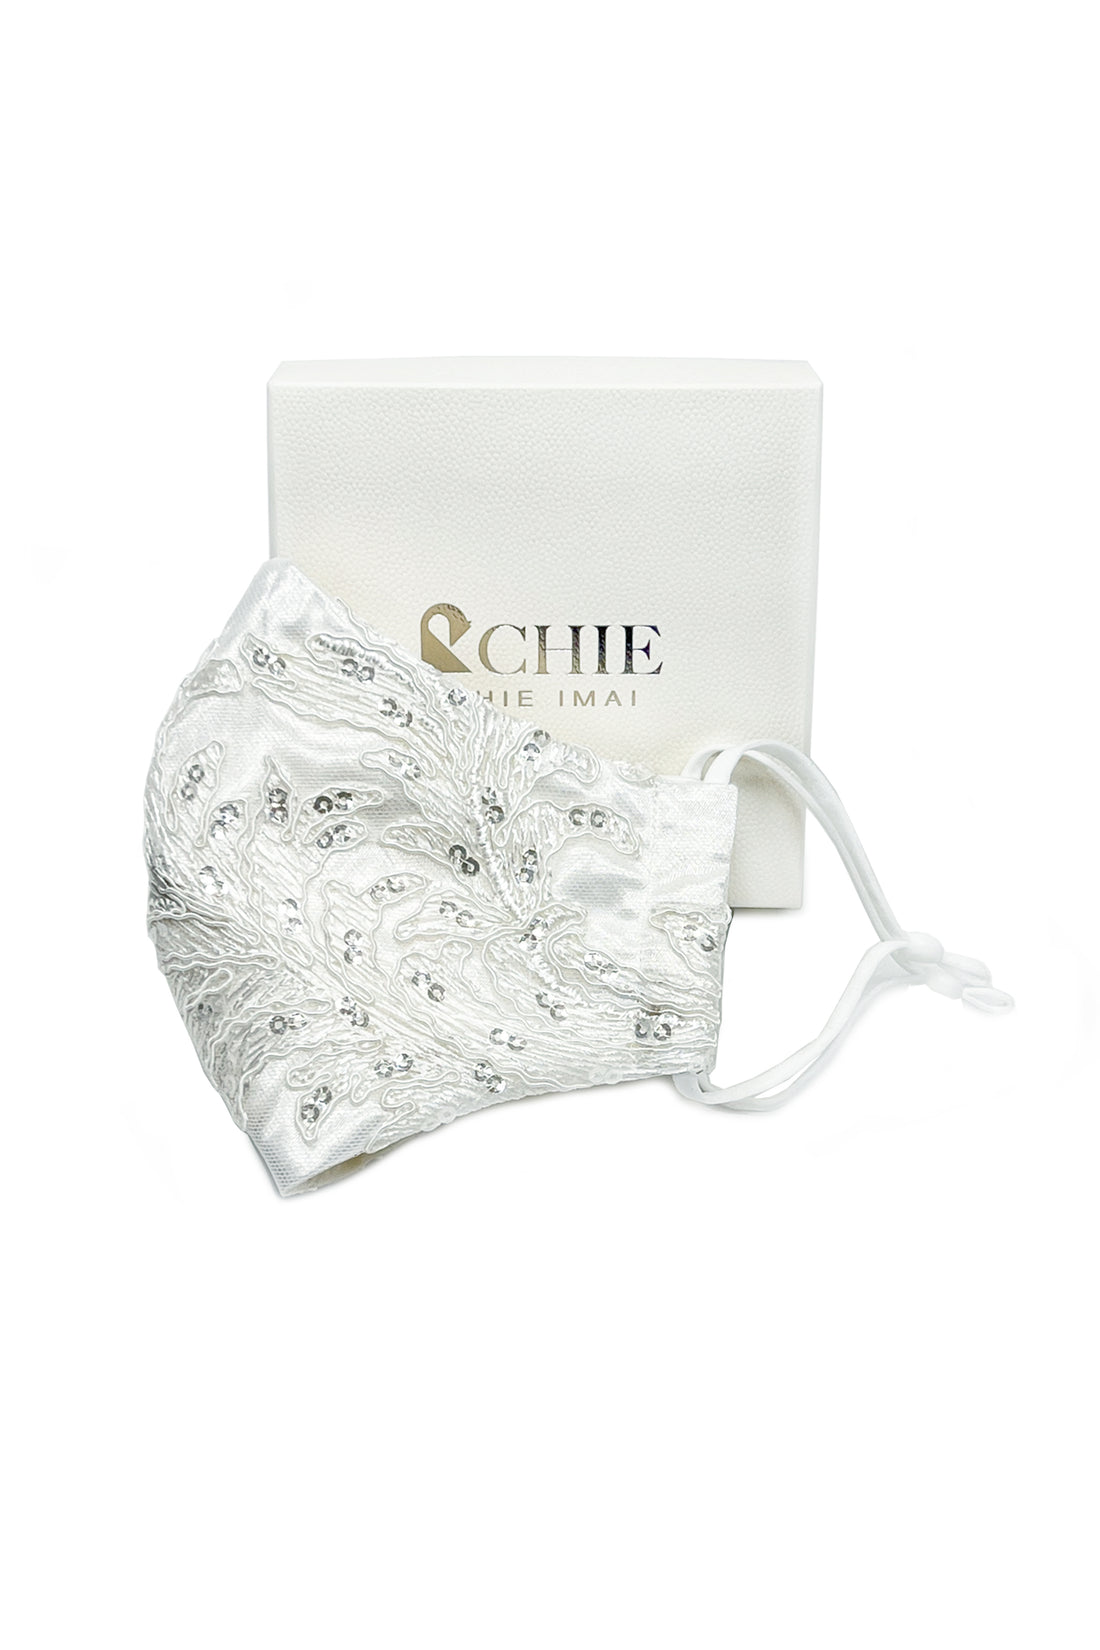 Chie Chic Posh Mask – Silky White